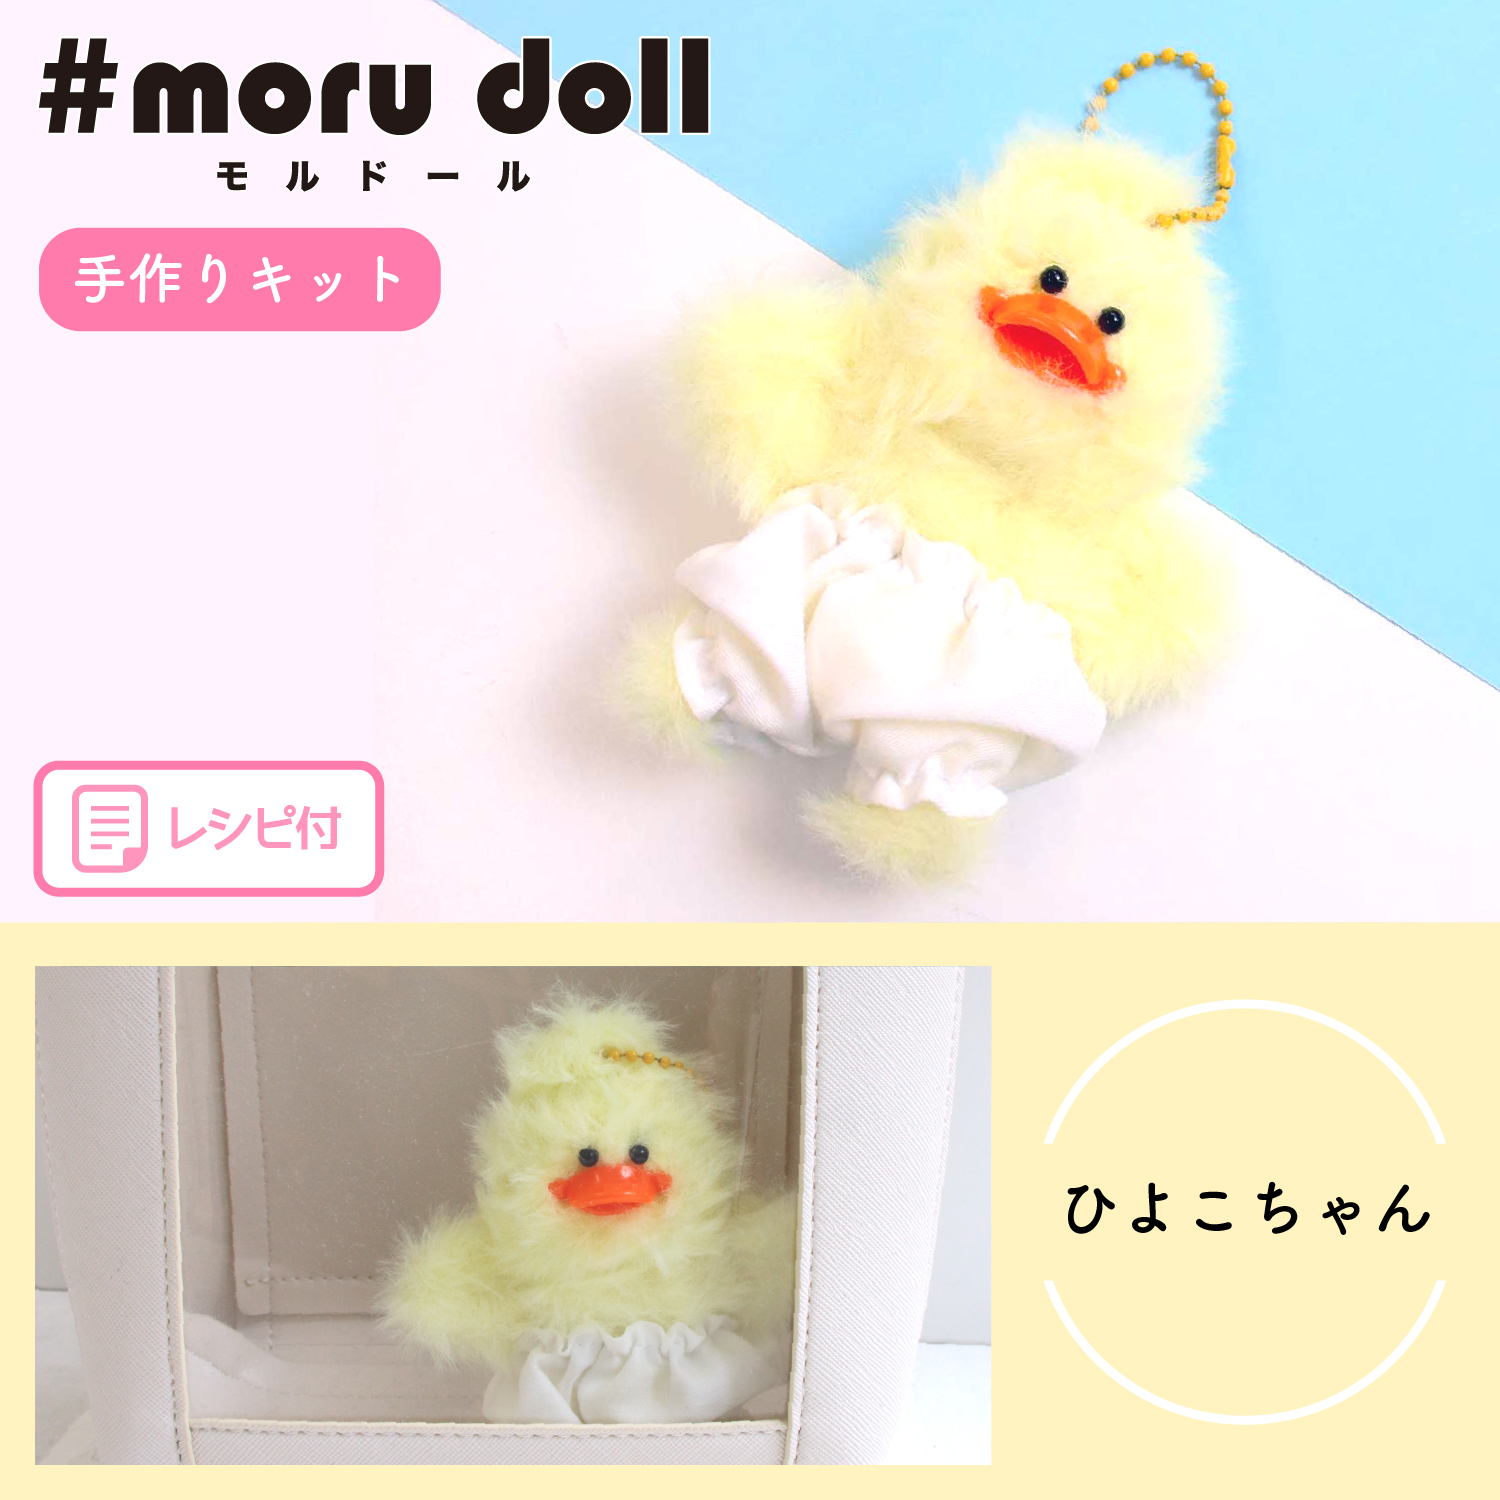 MOL-KIT Moll doll Korean miscellaneous goods Moldoll kit (bag)